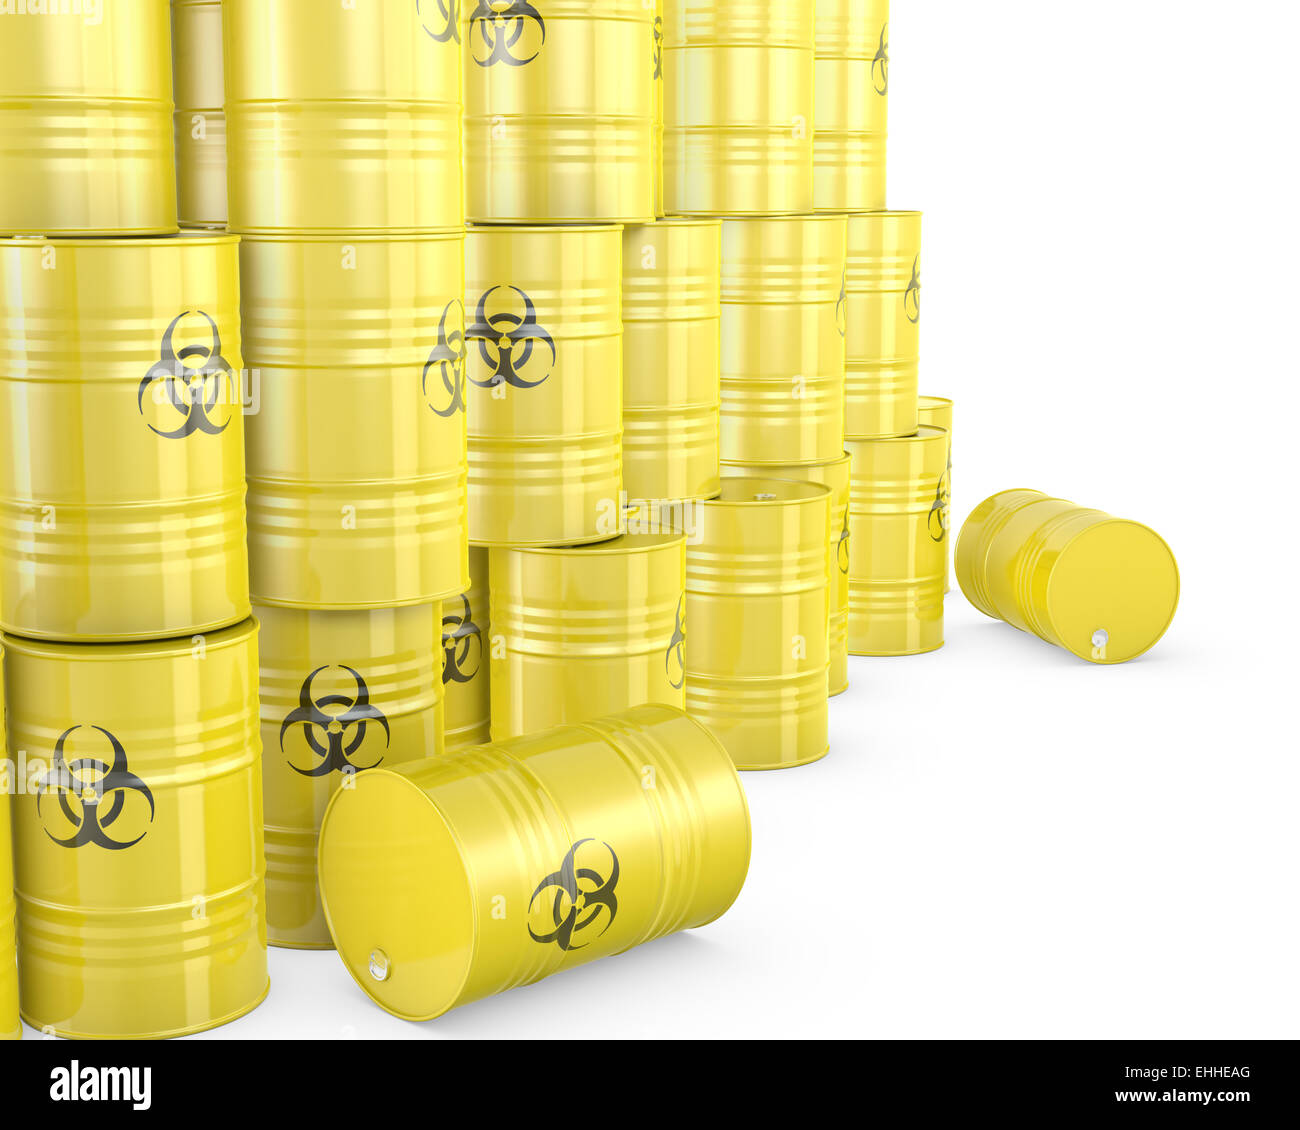 Barrels with biohazard symbol Stock Photo